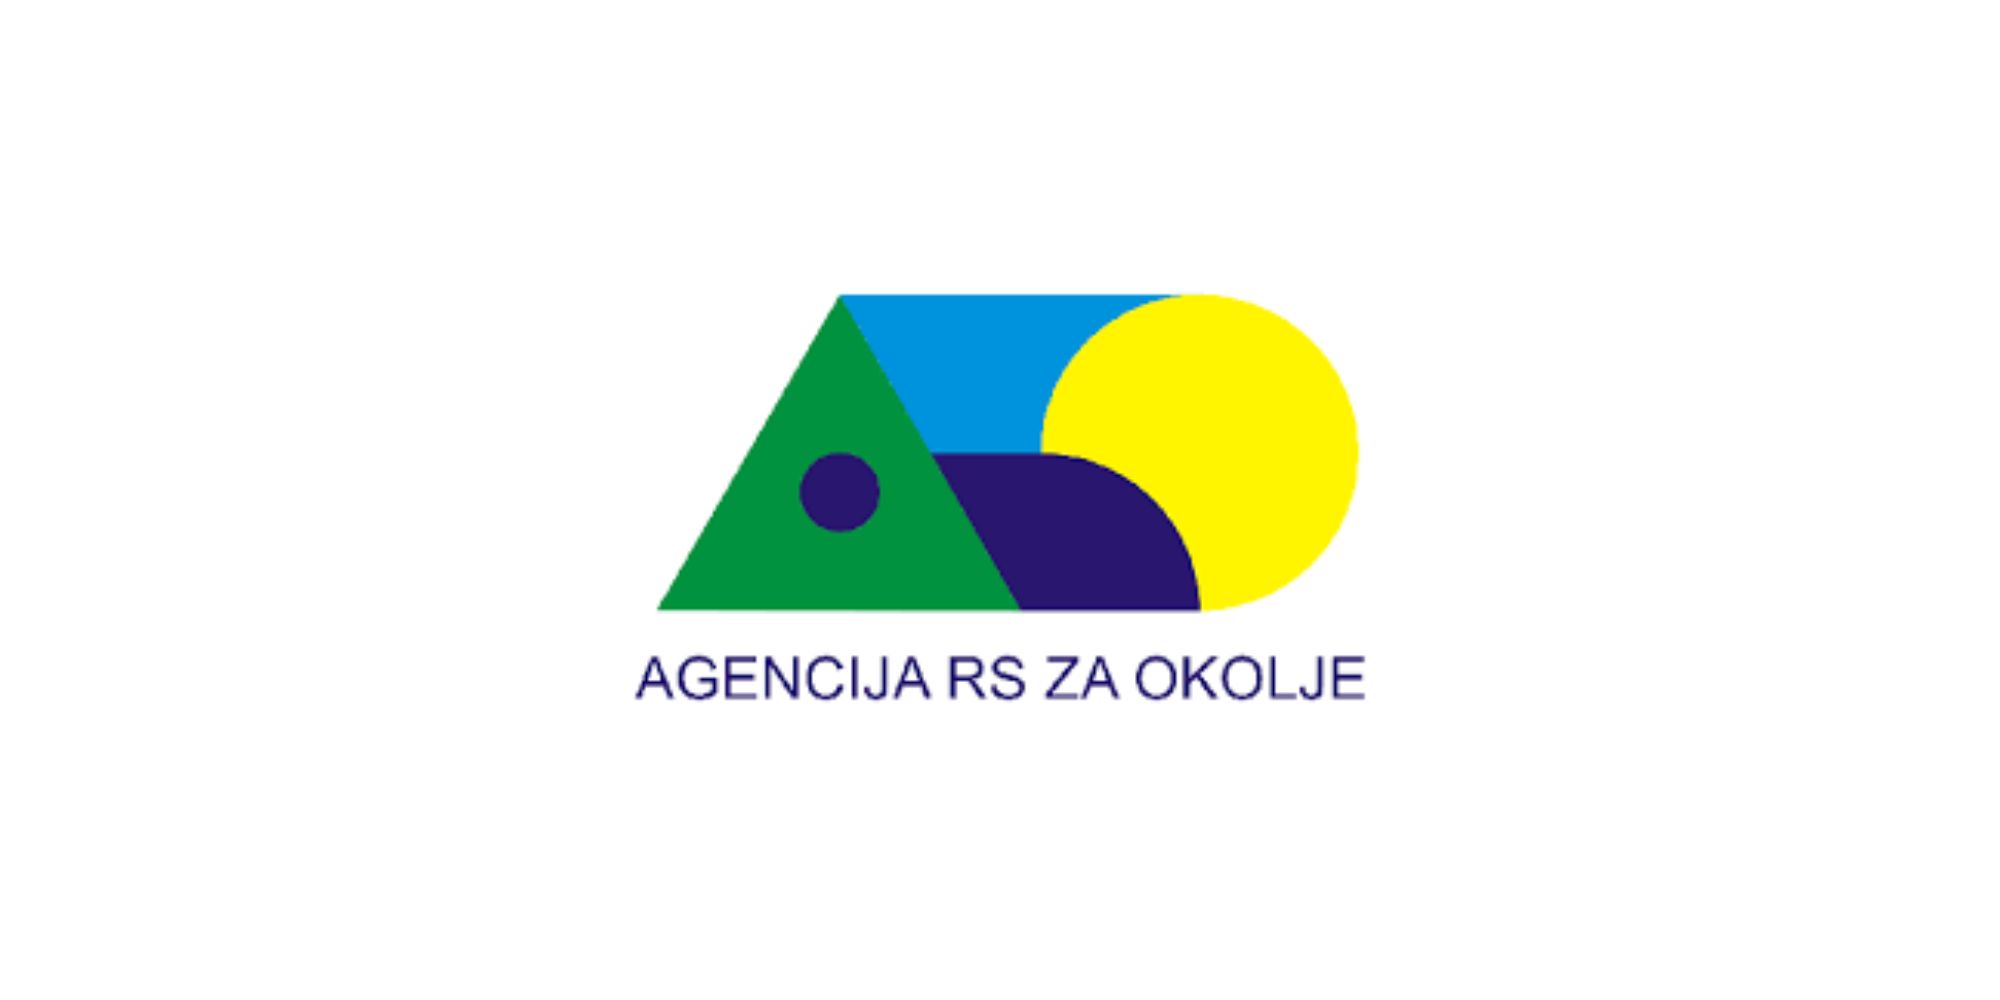 Slovenia Agencija rs Za Okolje